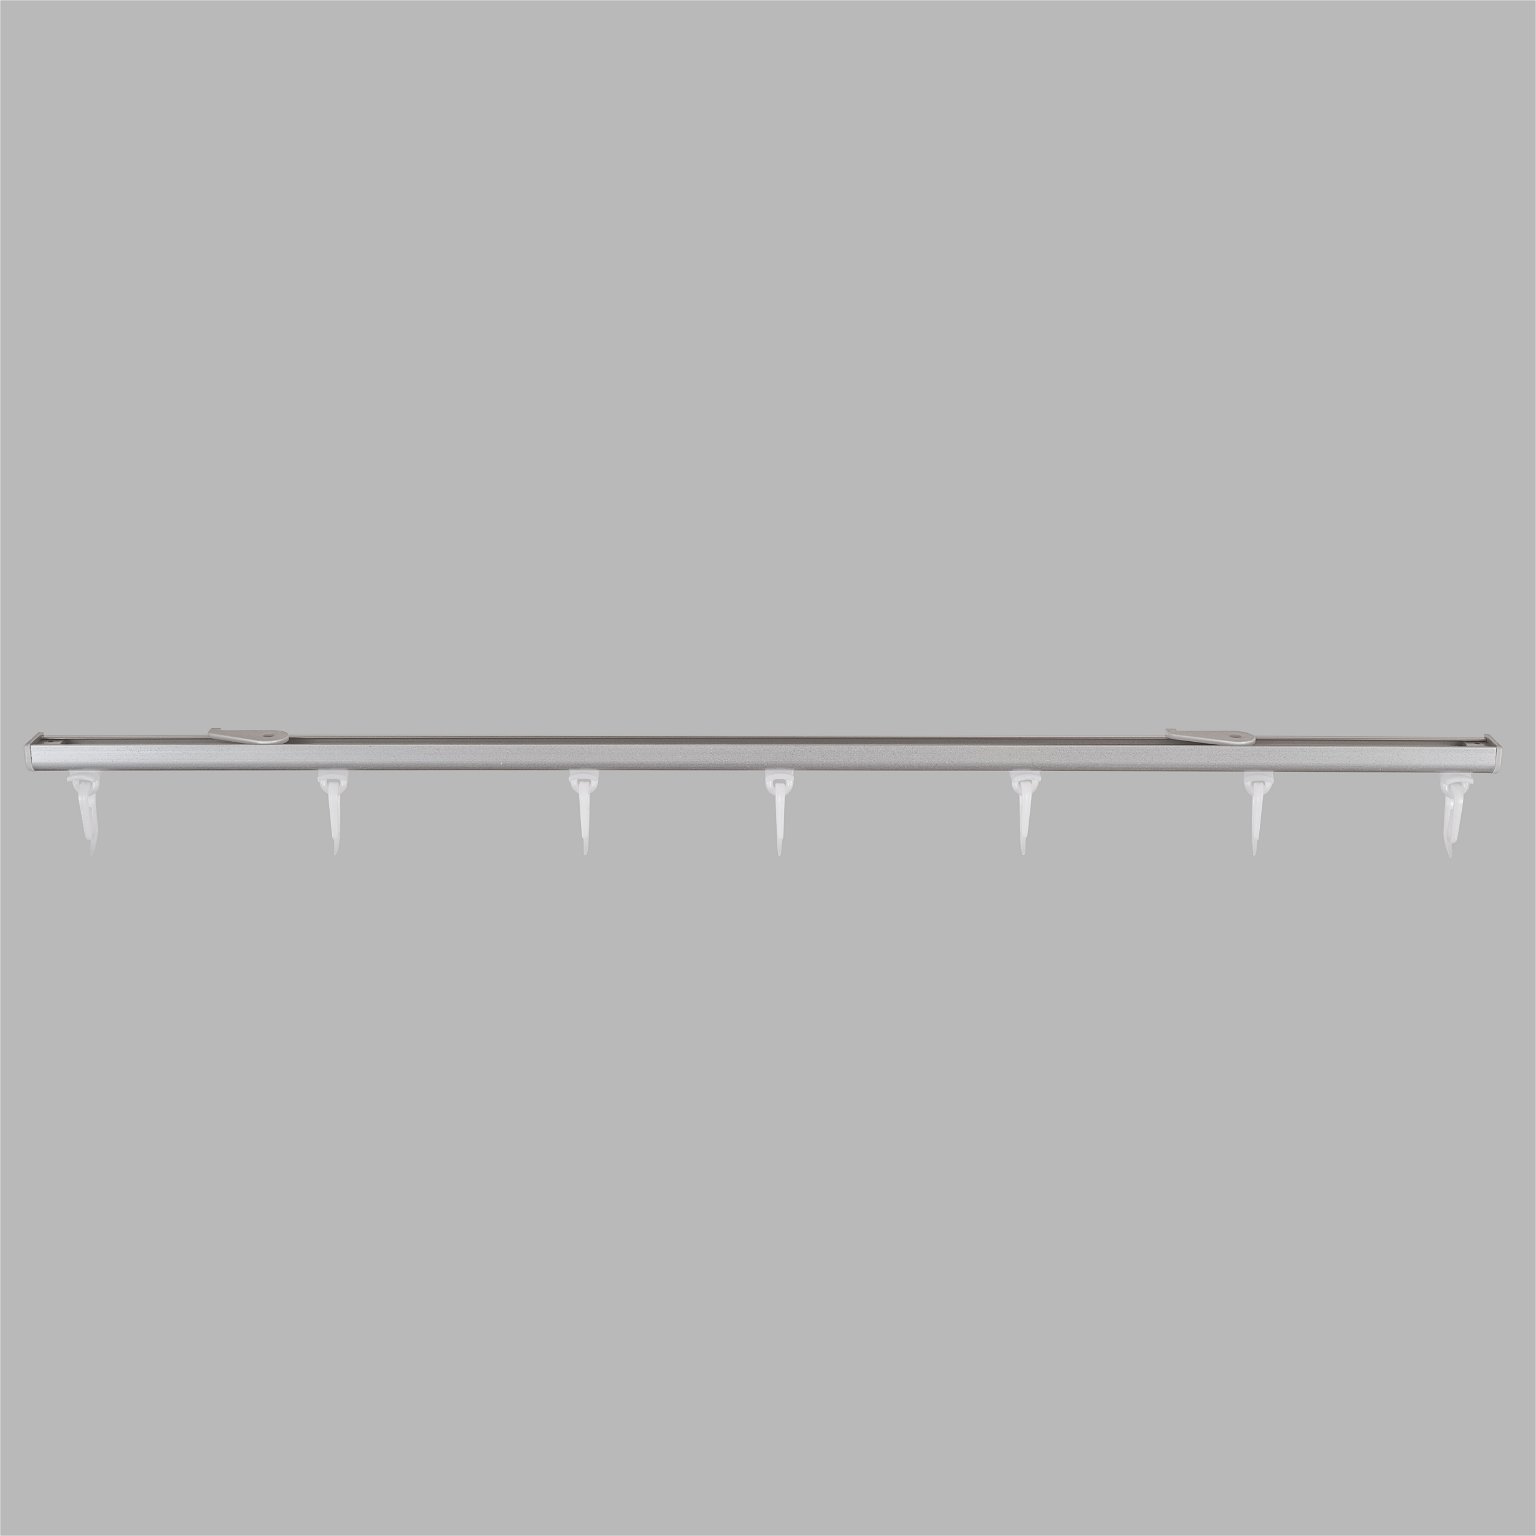 Aliuminio profilis D, matinio chromo sp., 150 cm, sukomplektuotas